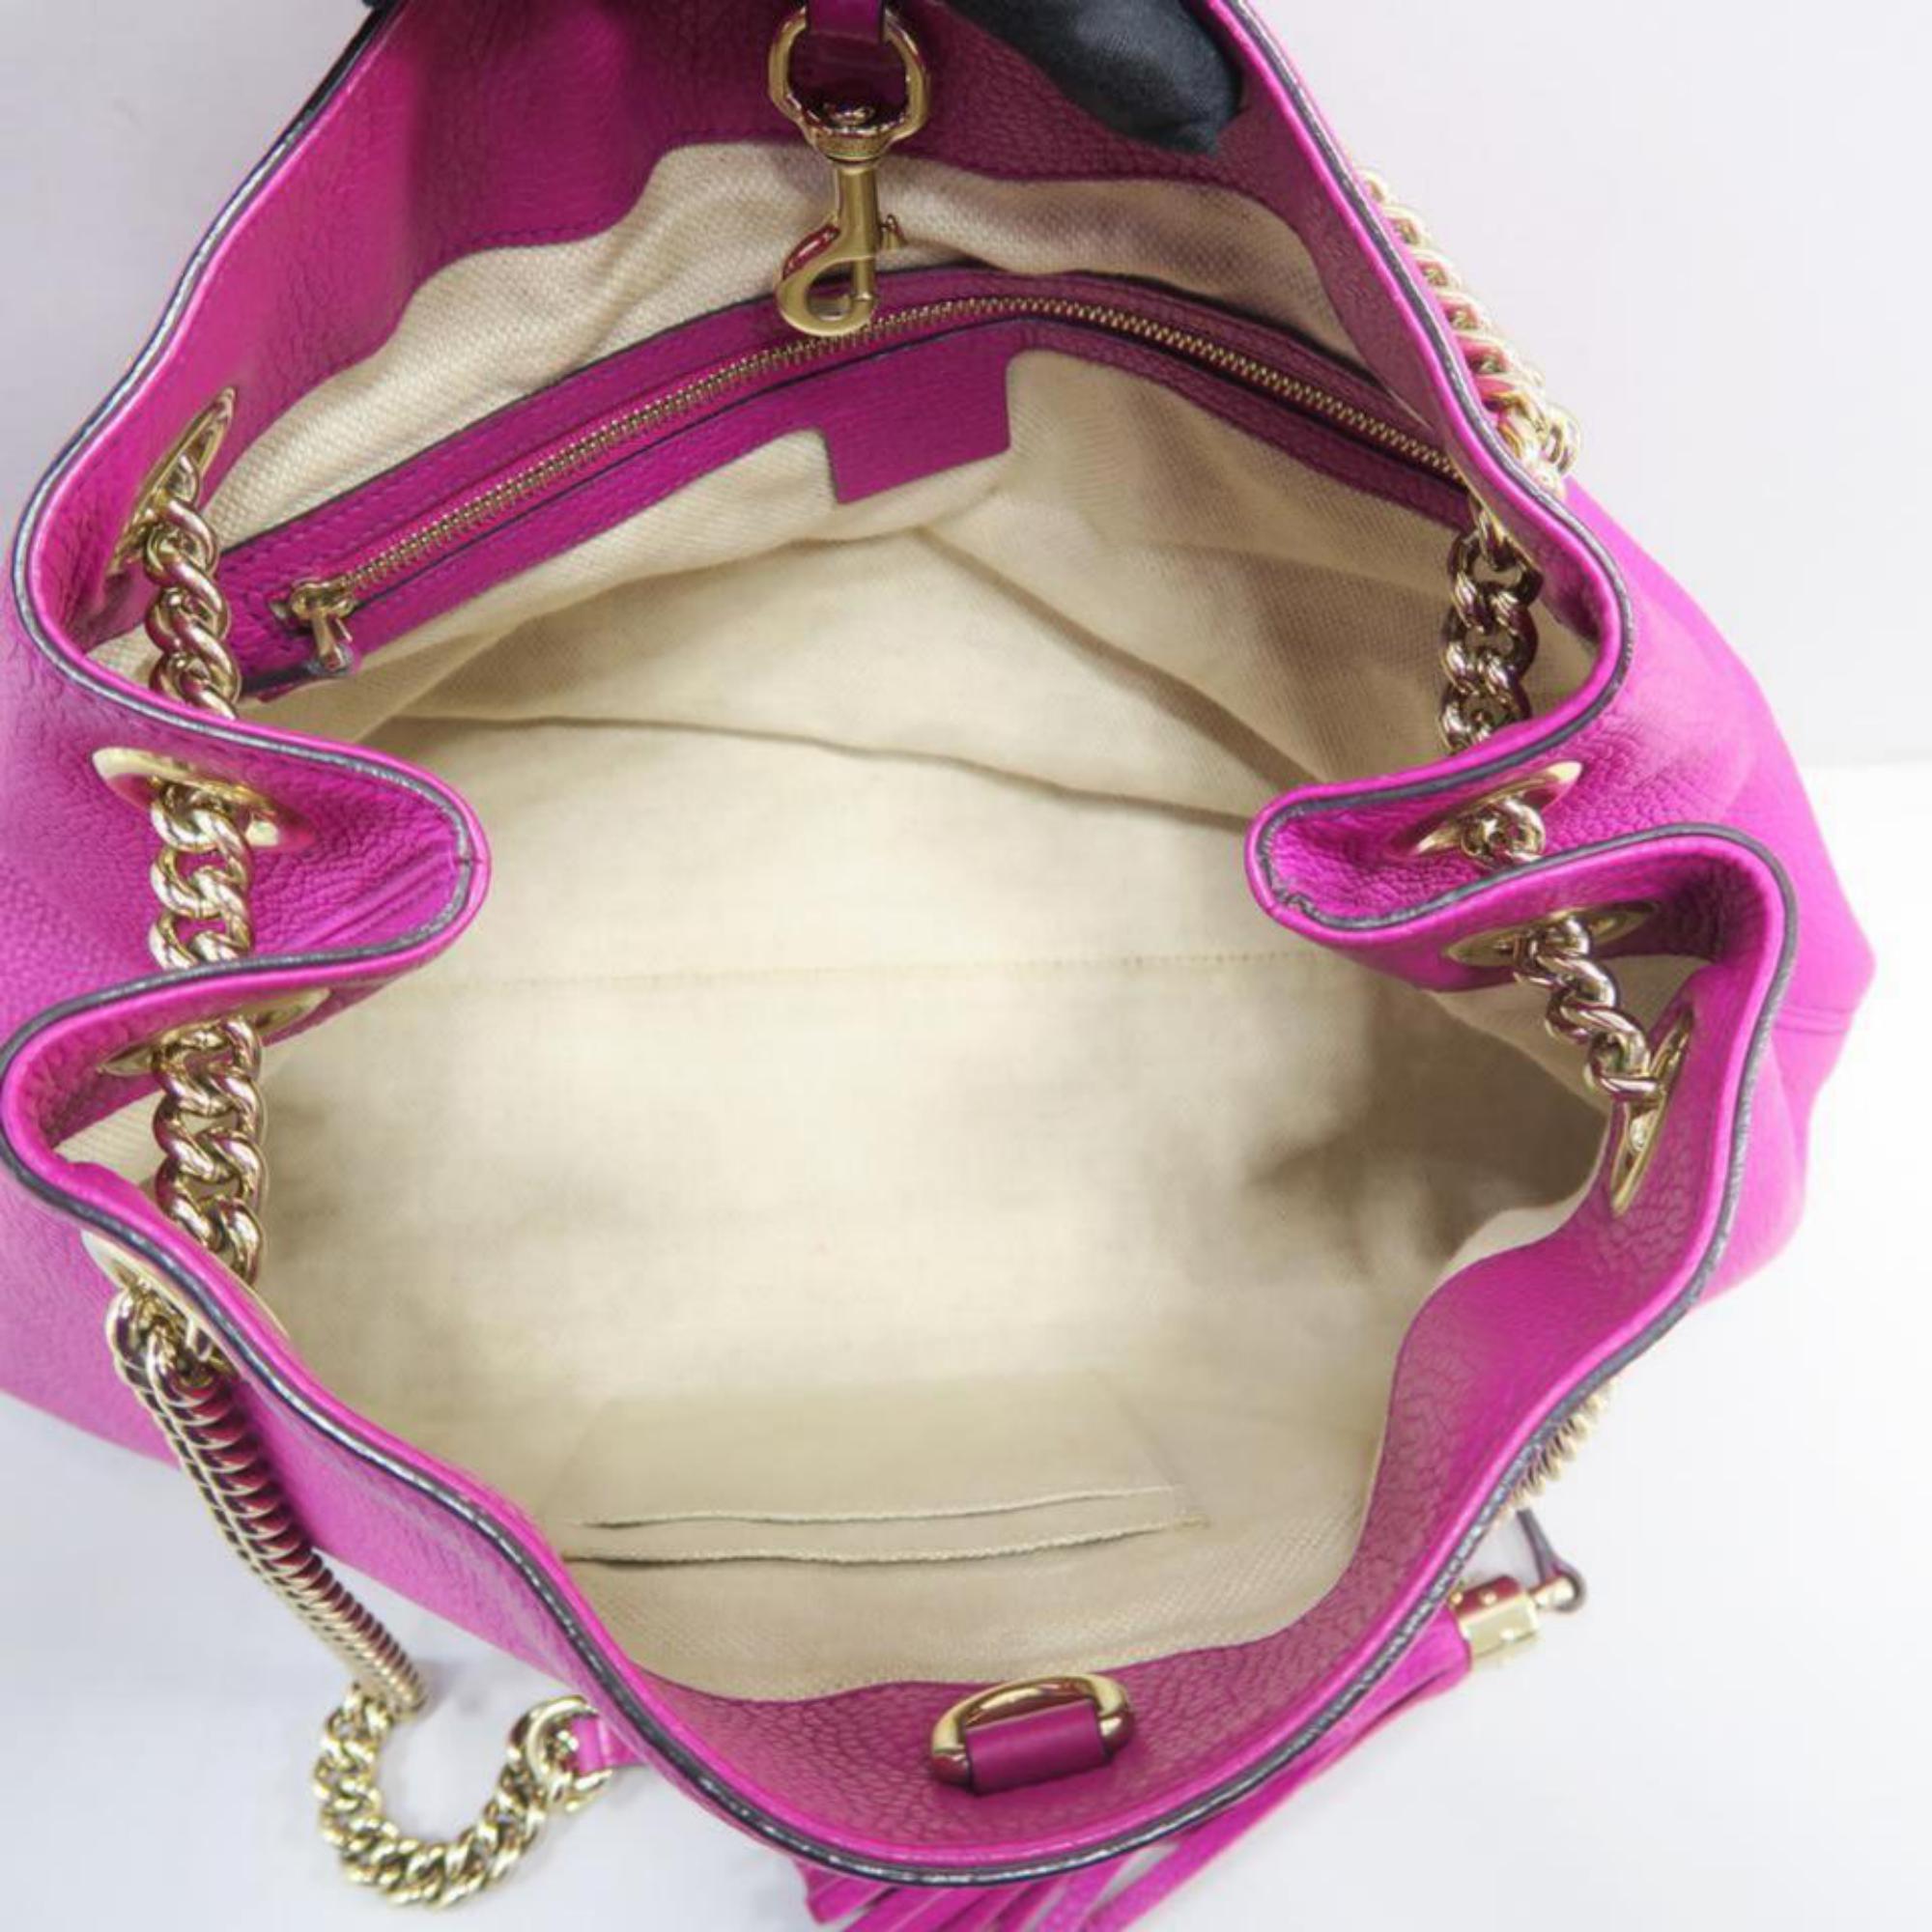 Gucci Soho Fringe Tassel Fuchsia Chain Tote 869084 Pink Leather Shoulder Bag 1